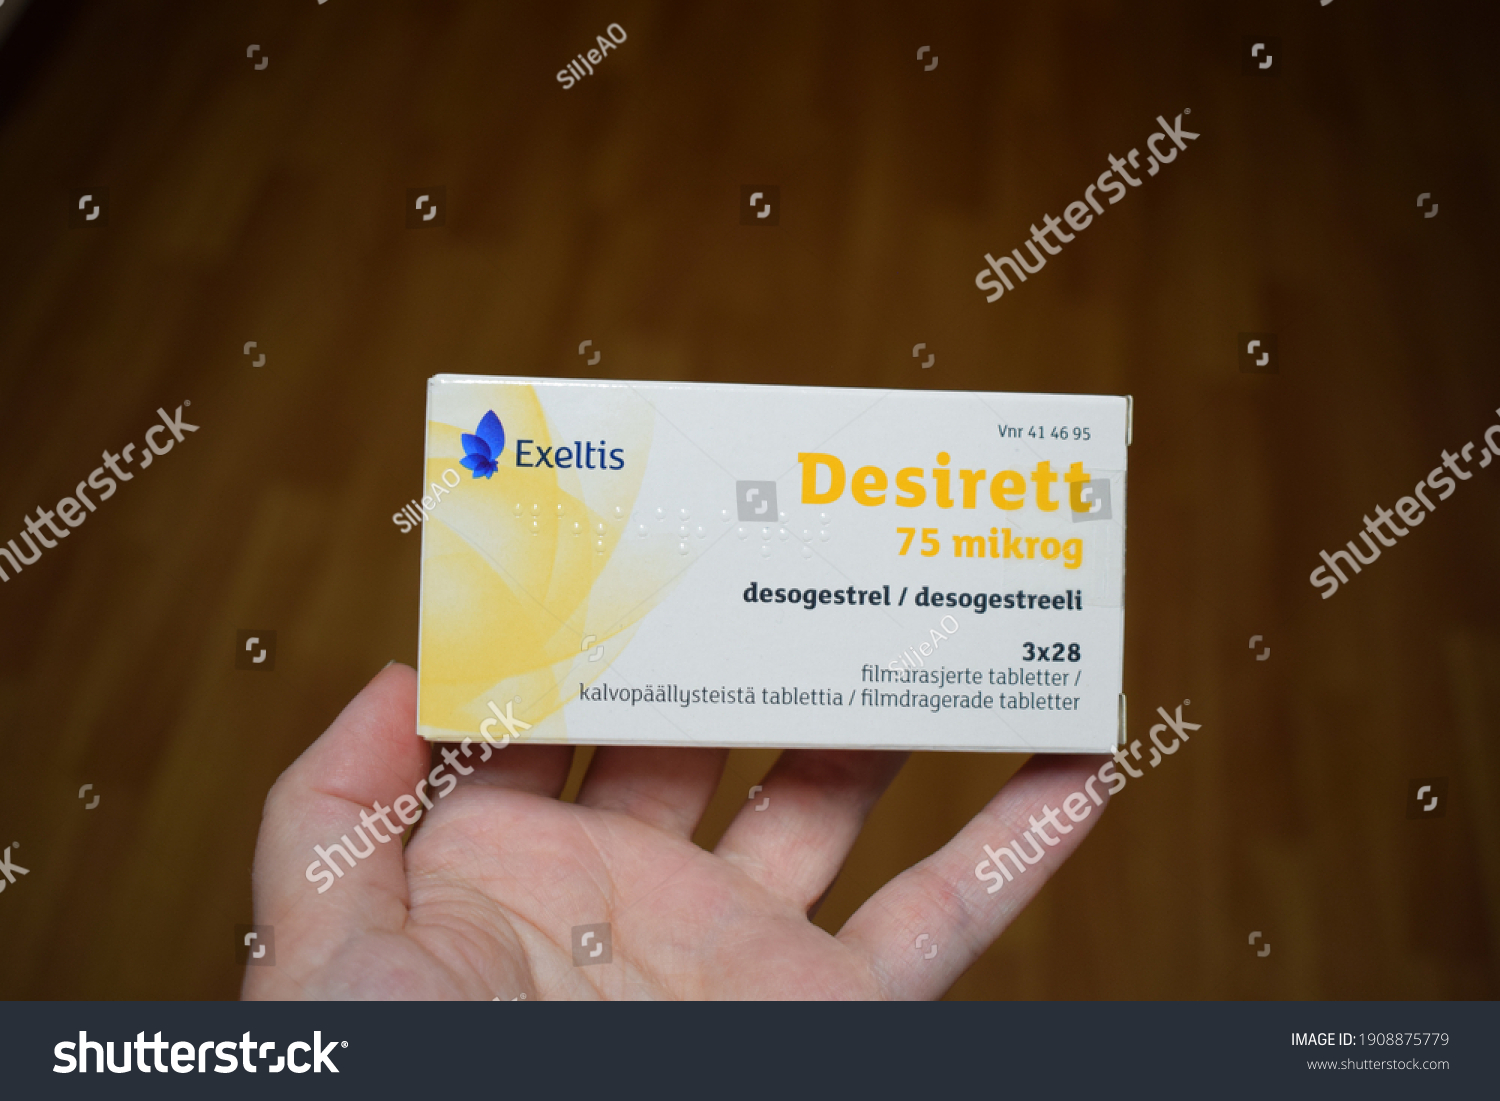 Exeltis Desirett Desogestrel Desogestreeli Pills Package